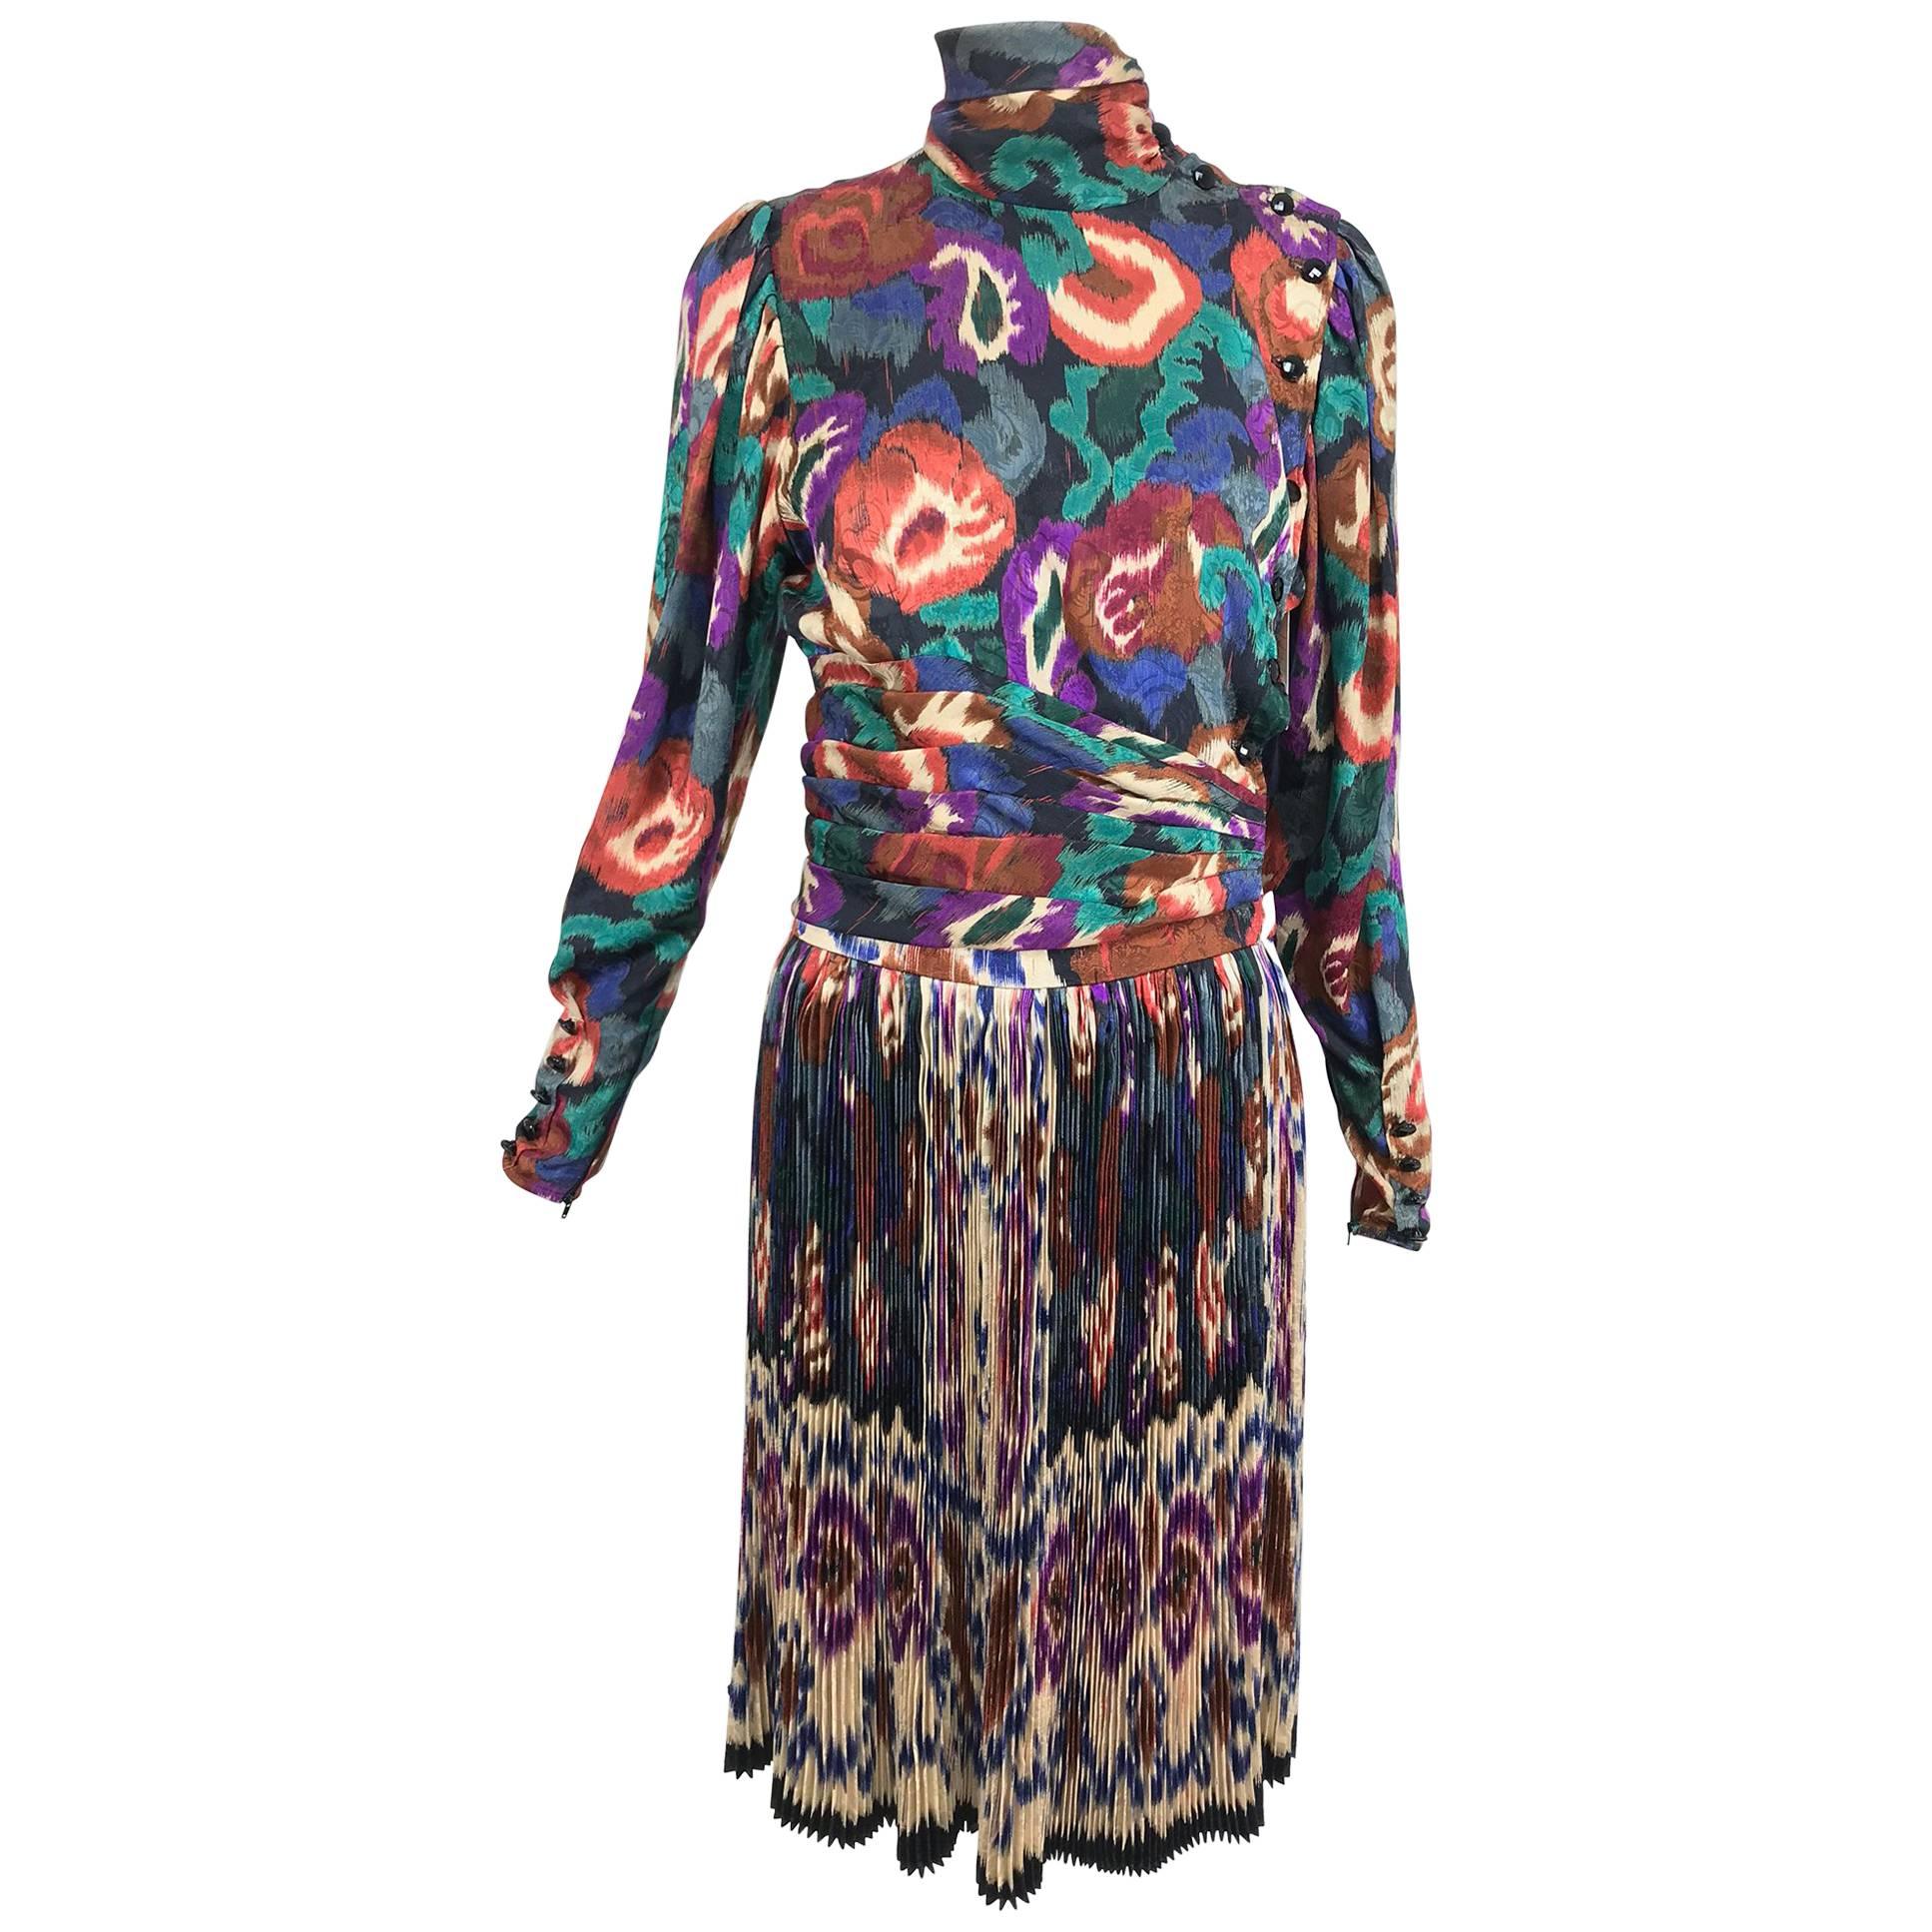 Vintage Ungaro rich silk jacqard ikat print pleated skirt and top 1980s